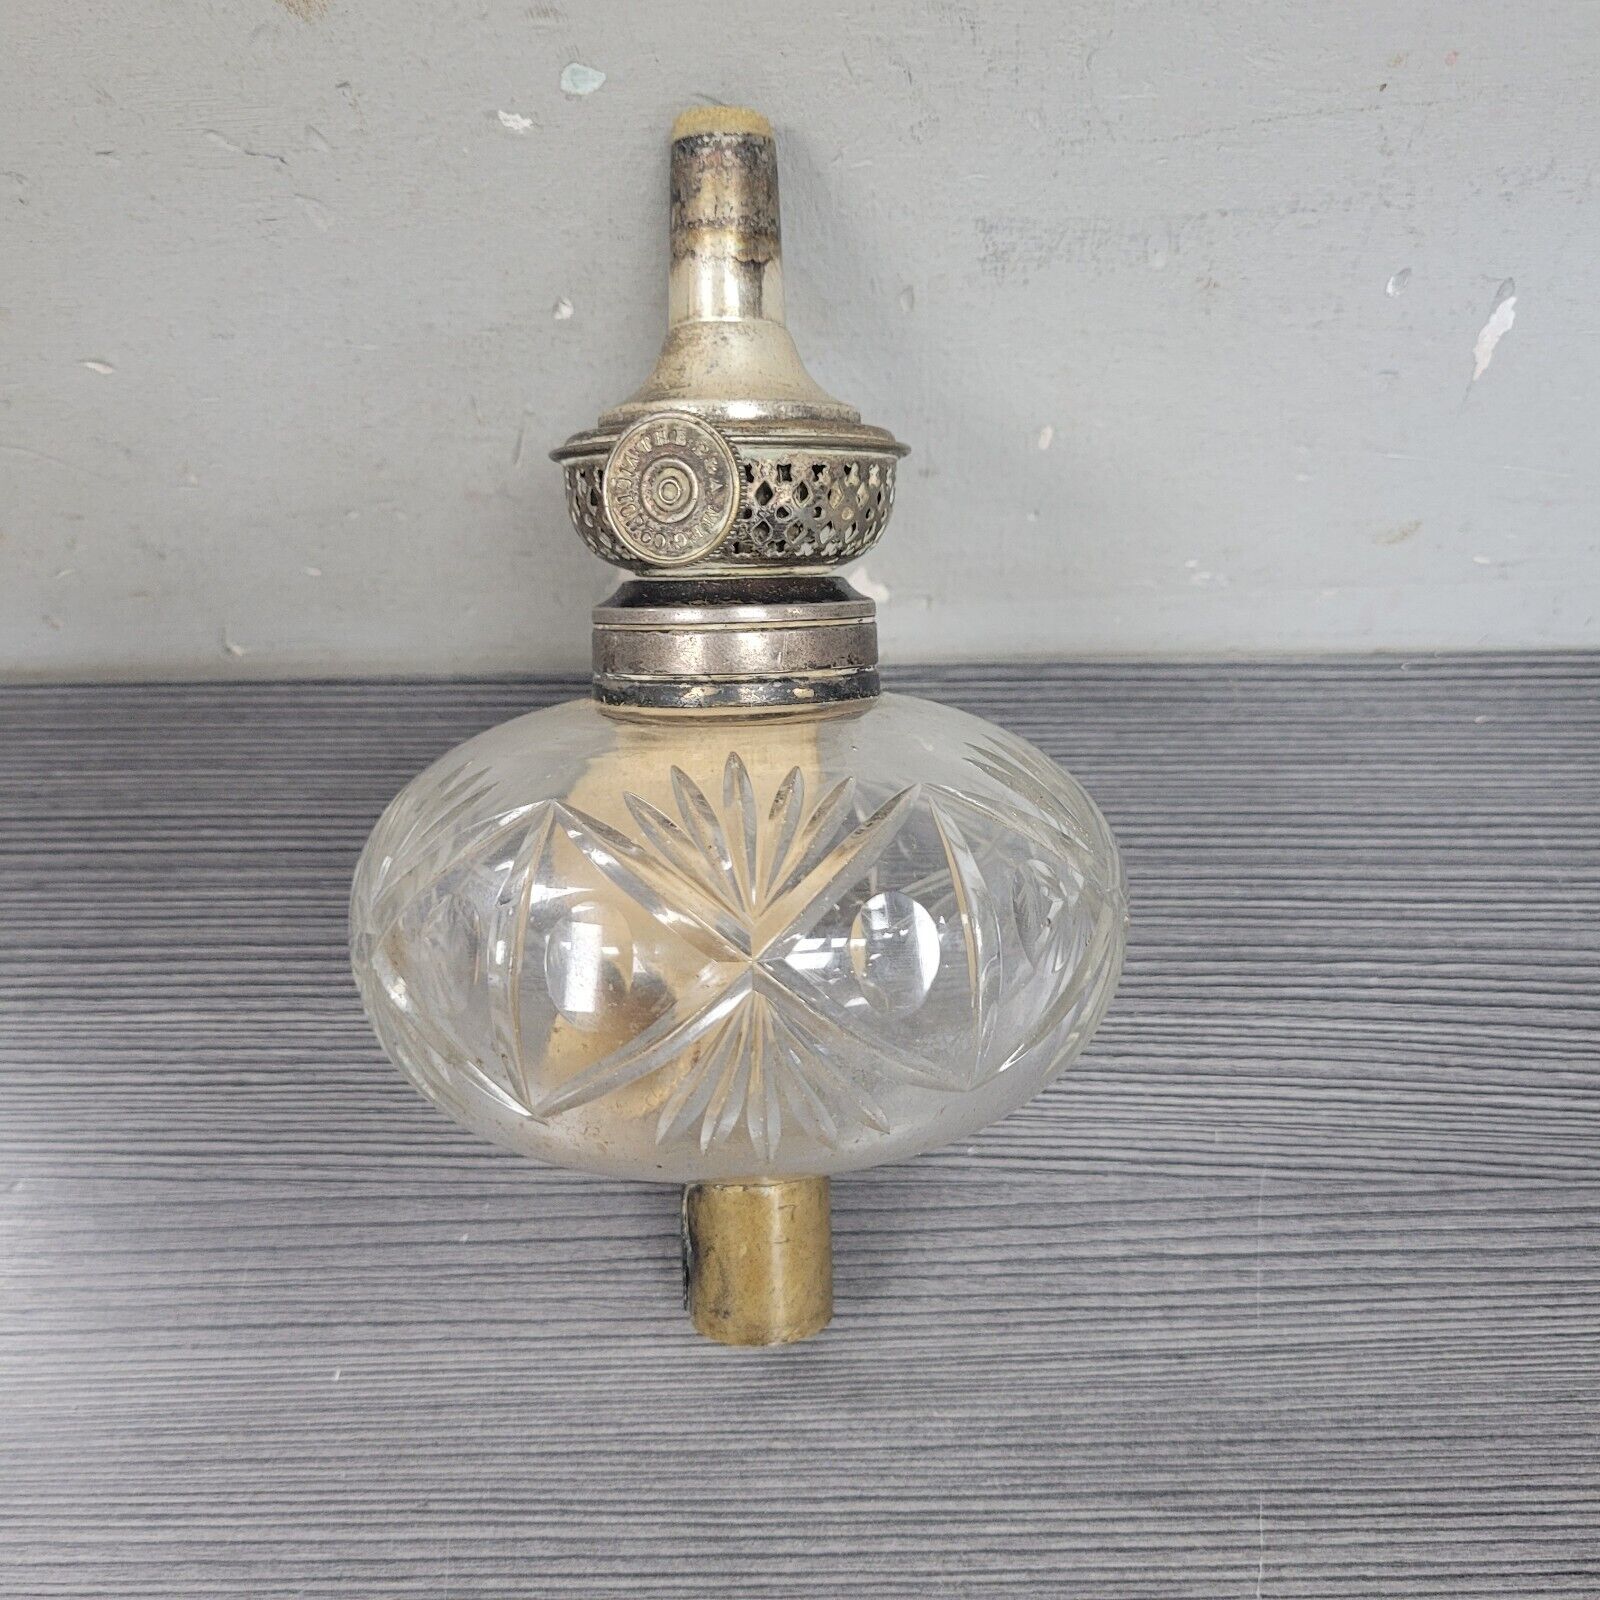 VICTORIAN BLOWN GLASS PEG LAMP W/ P&A VICTOR BURNER abp fan vintage